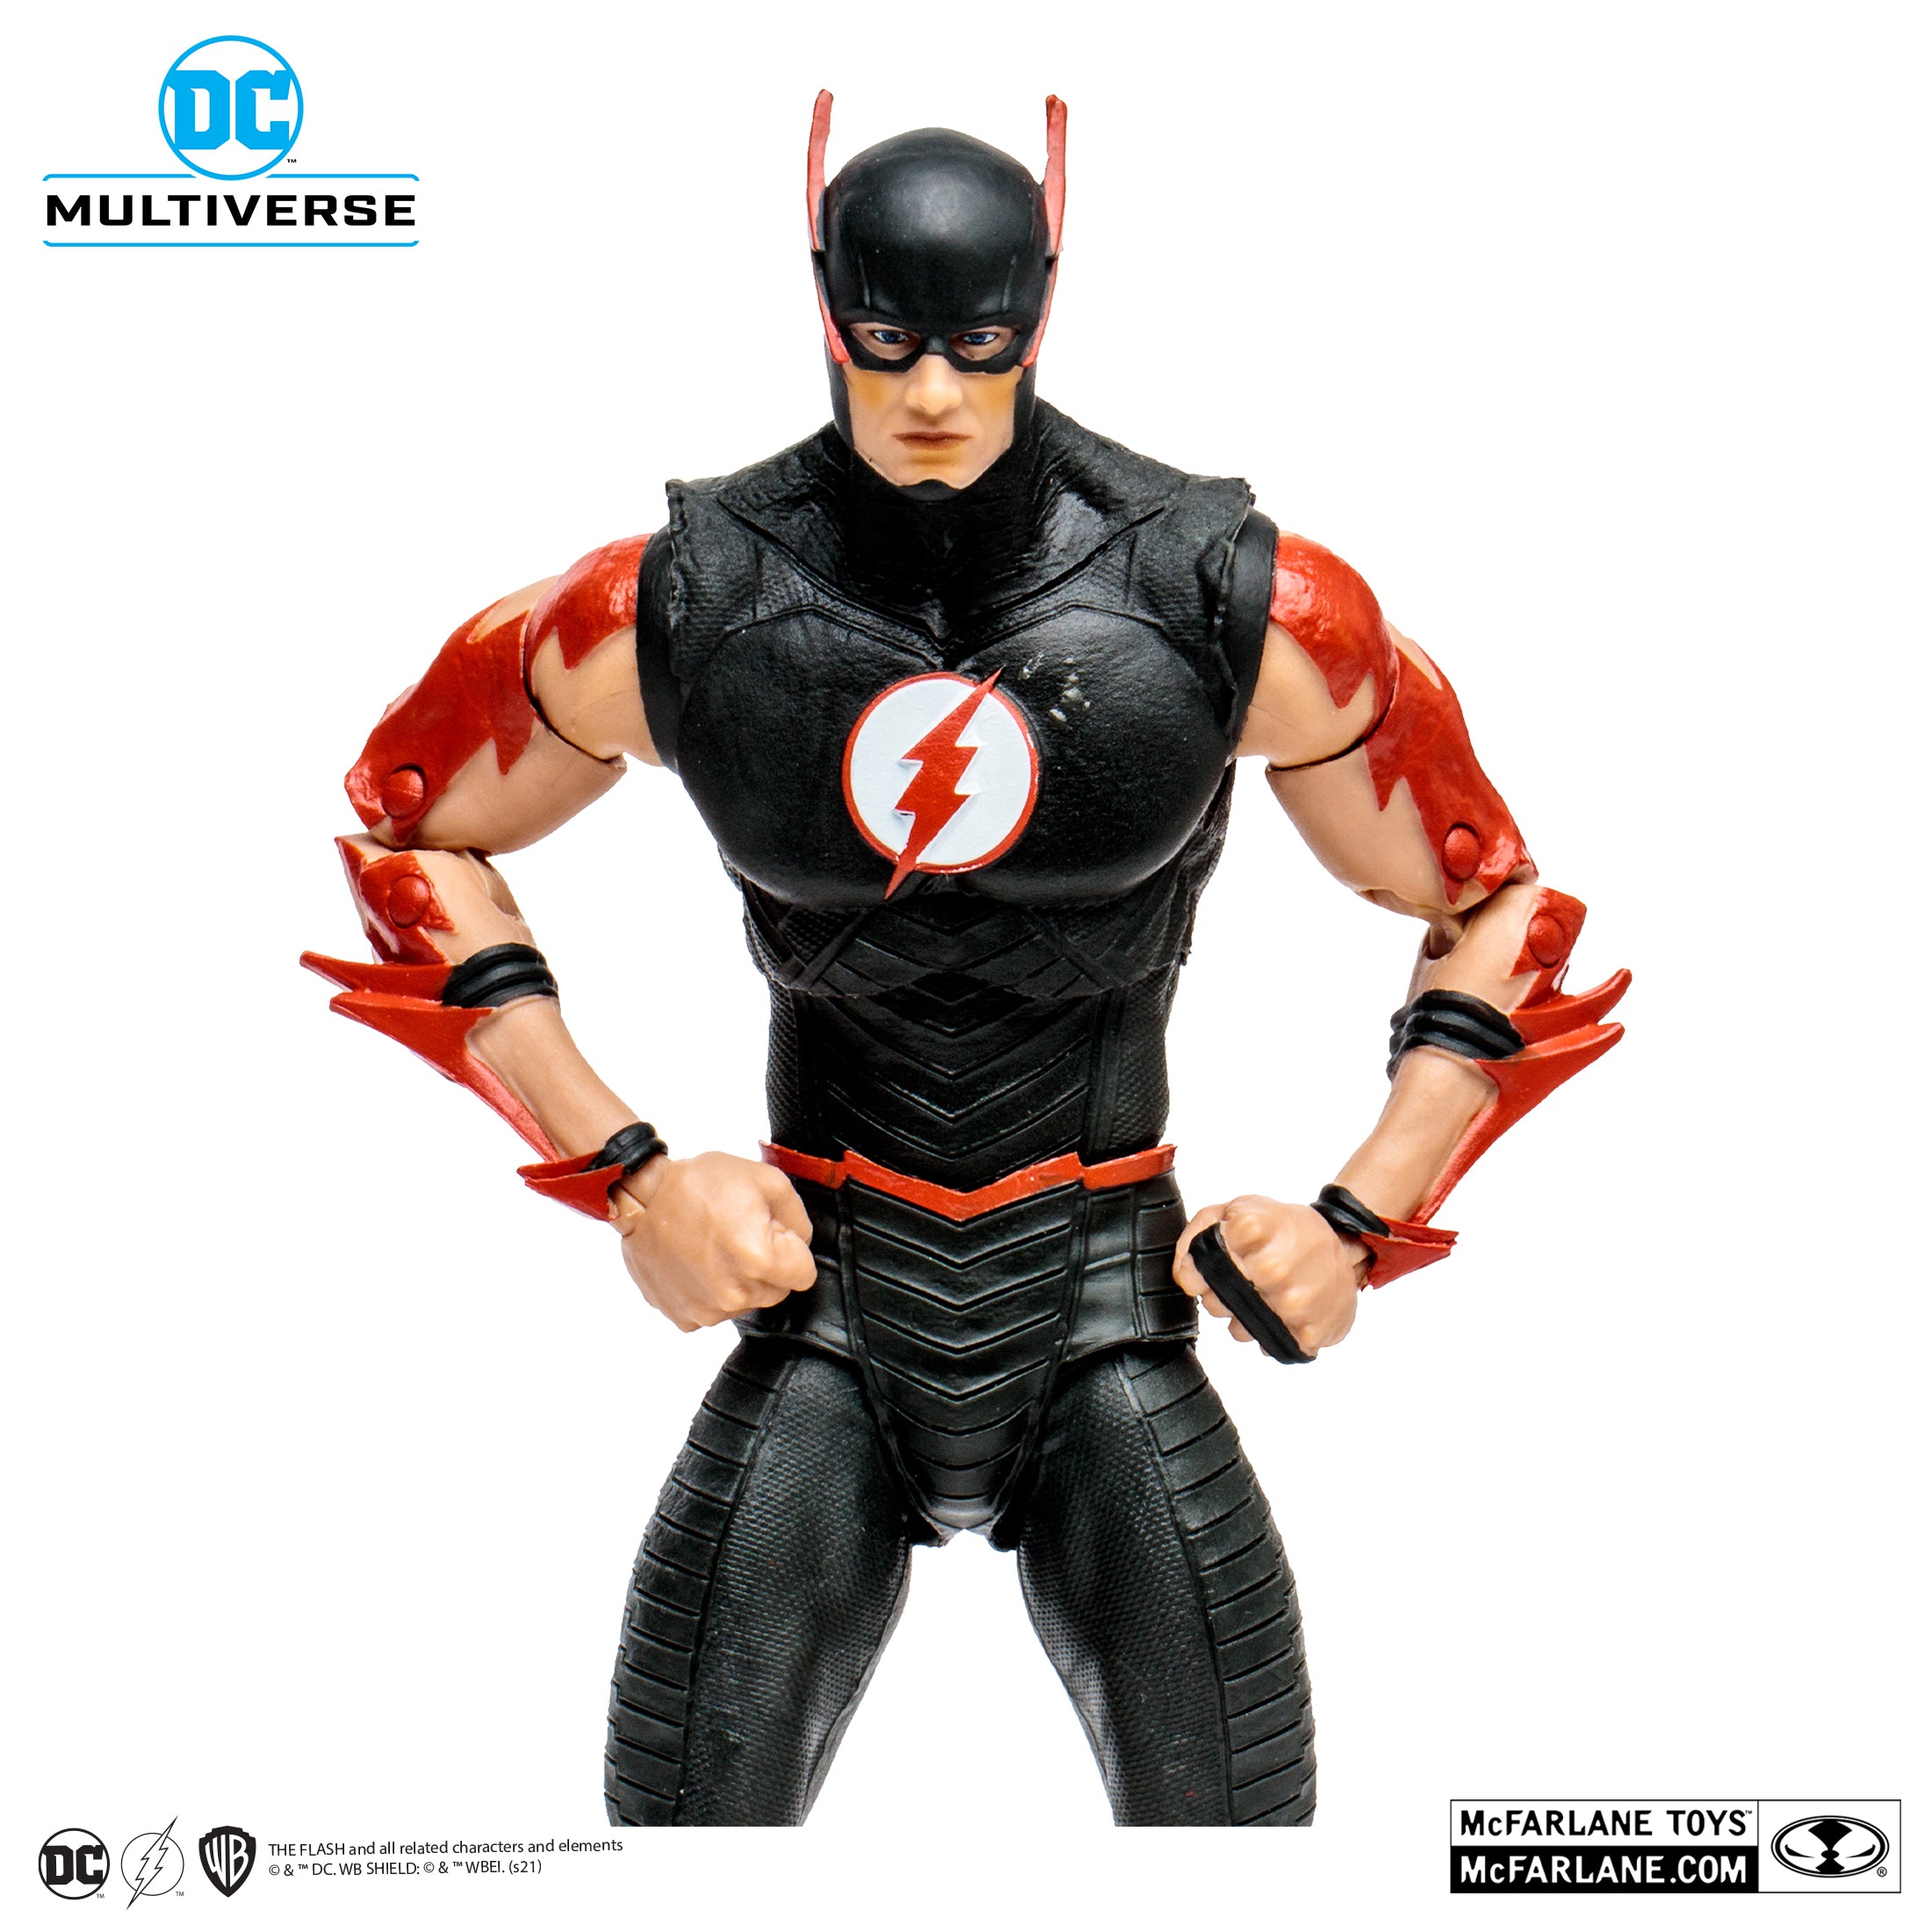 DC Multiverse - McFarlane Toys - Speed Metal - Barry Allen